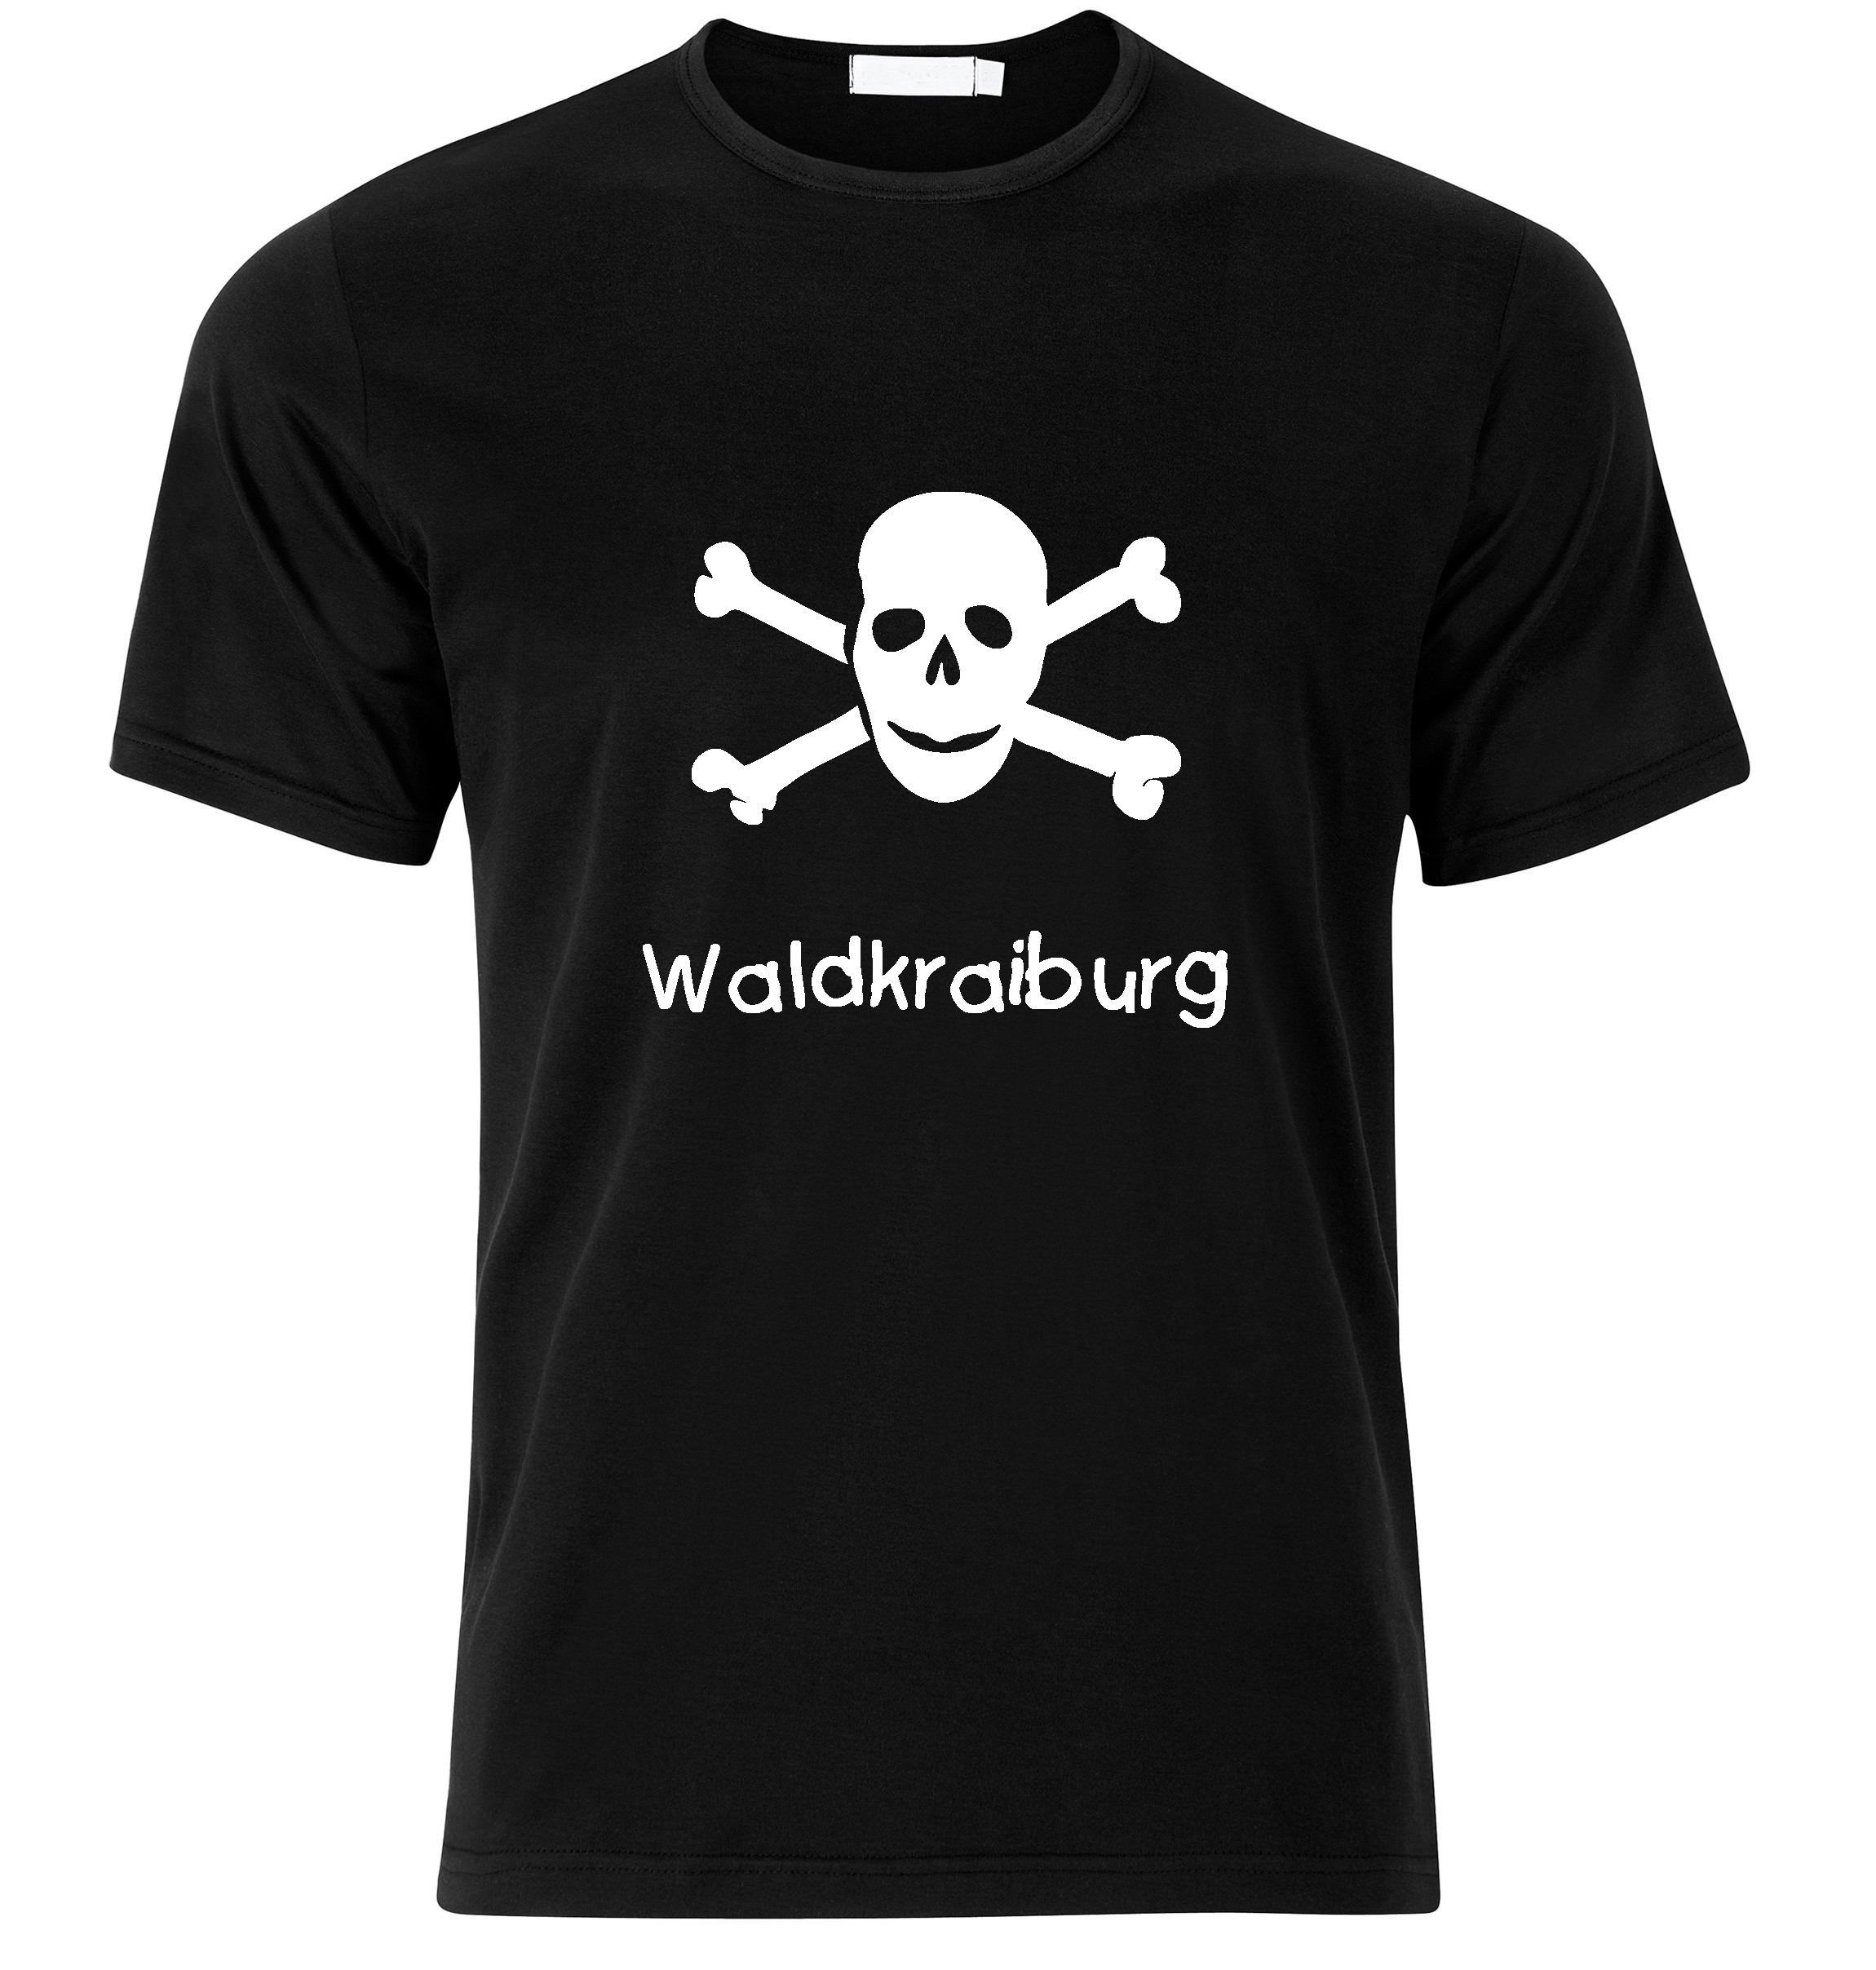 T-Shirt Waldkraiburg Jolly Roger, Totenkopf